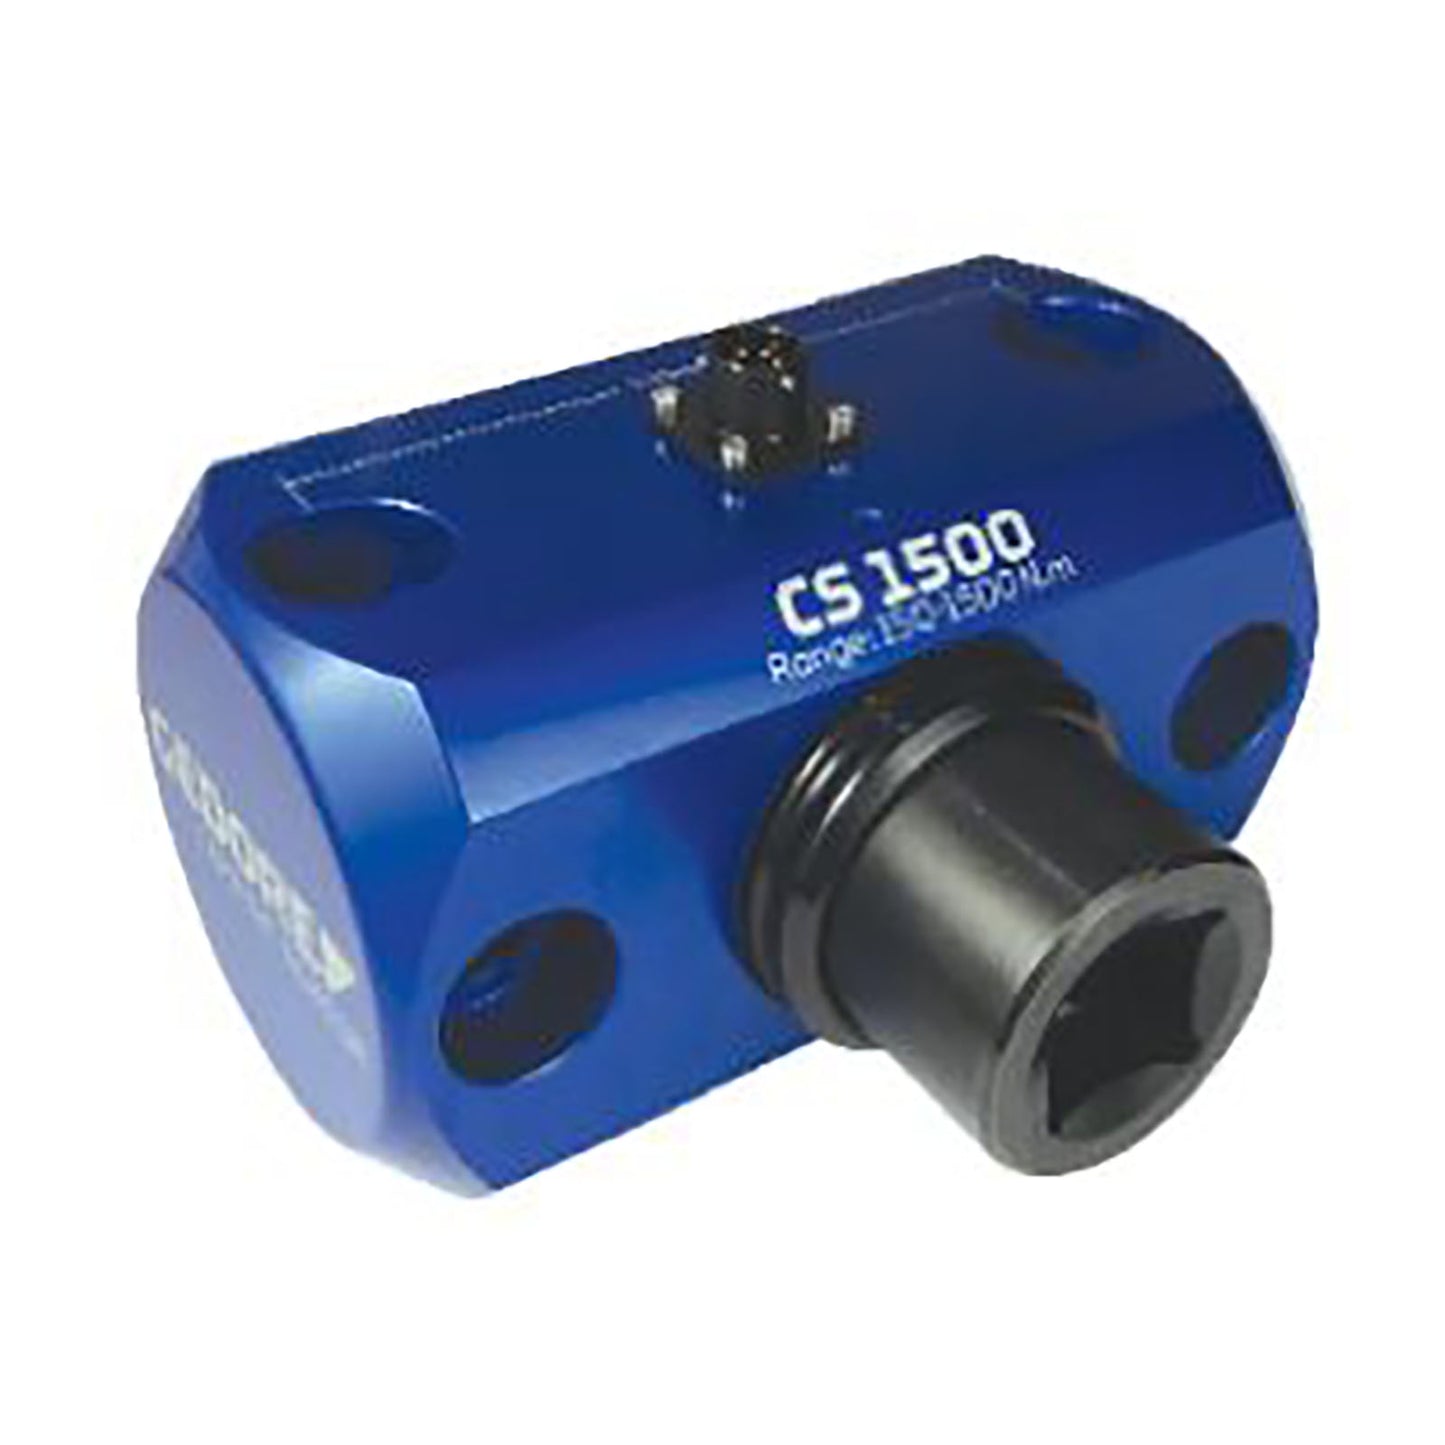 GEDORE CS 25 038815 - CAPTURE Sensor 2.5-25 Nm 038815 (3124118)